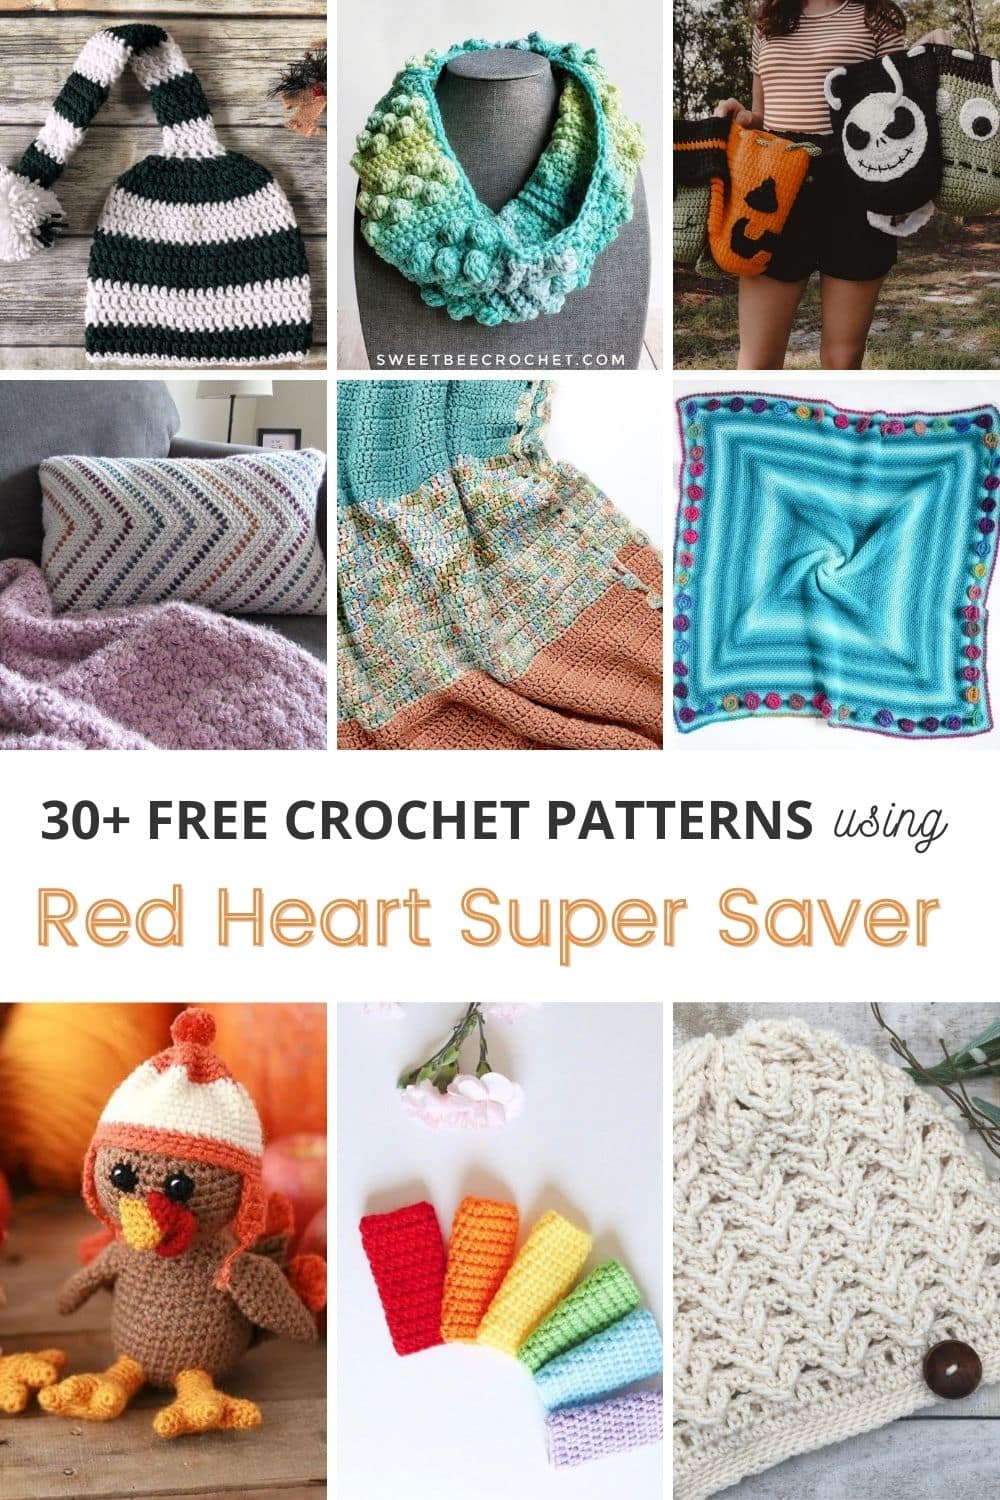 9+ Free Crochet Patterns Using Red Heart Super Saver   Sigoni ...